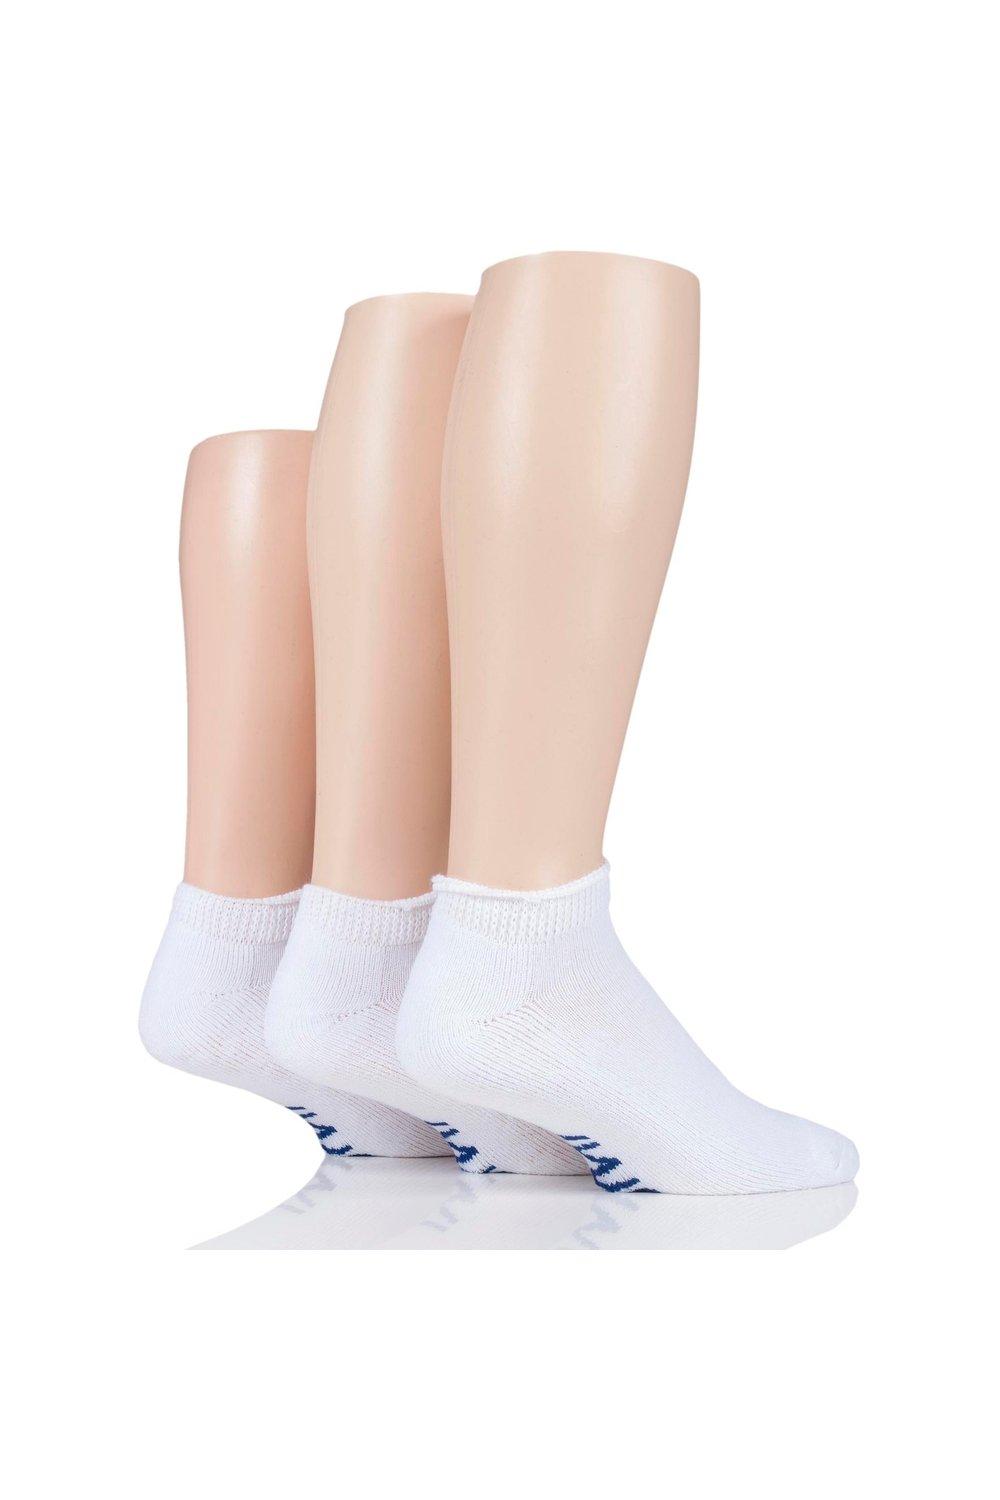 3 Pair Footnurse Cushioned Foot Diabetic Trainer Socks